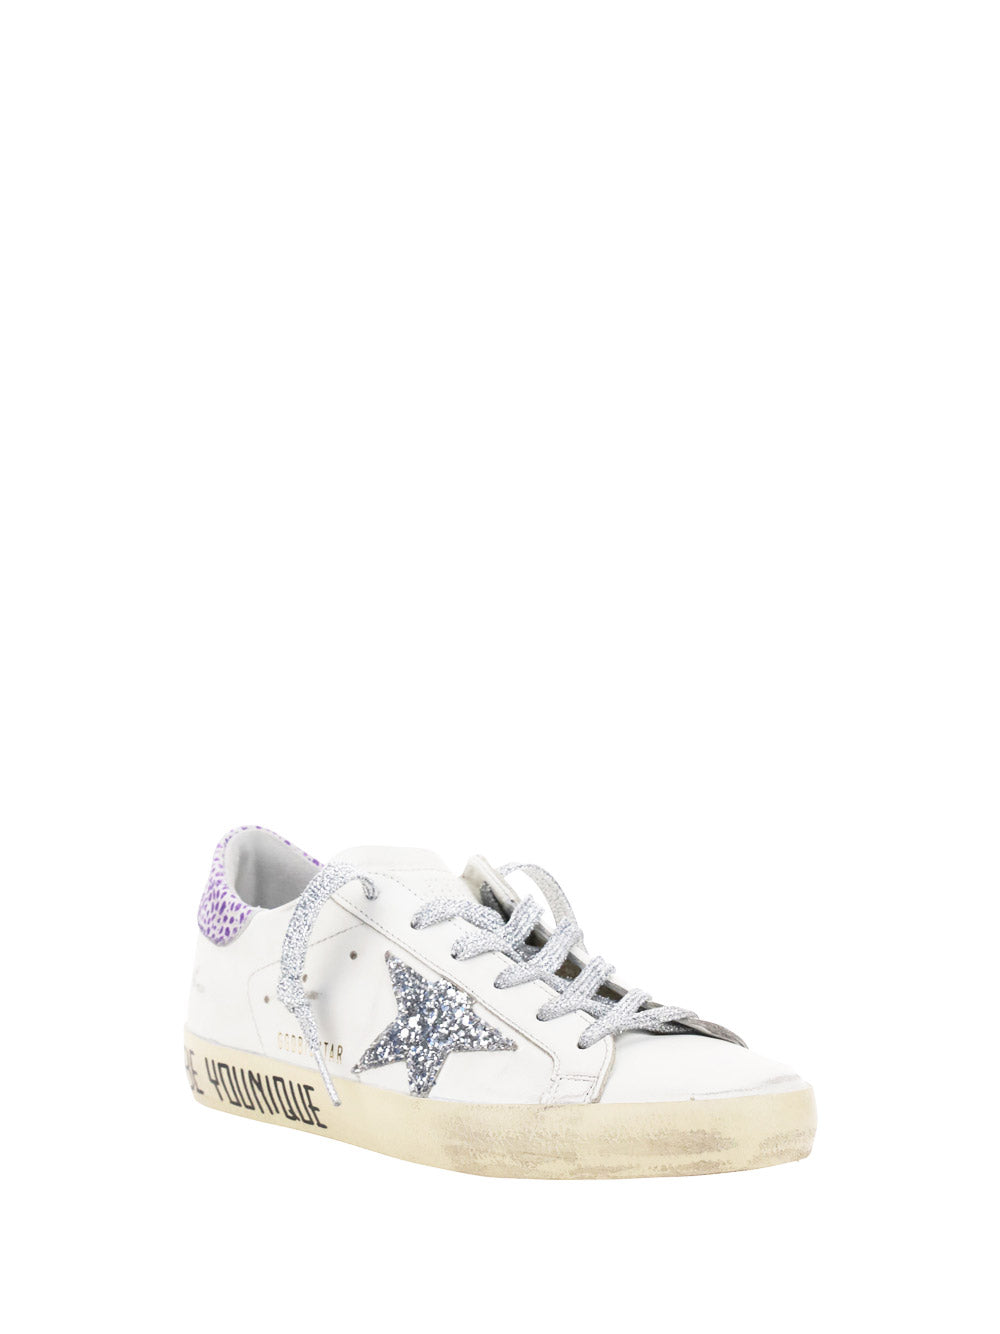 Superstar Sneakers - Purple / White